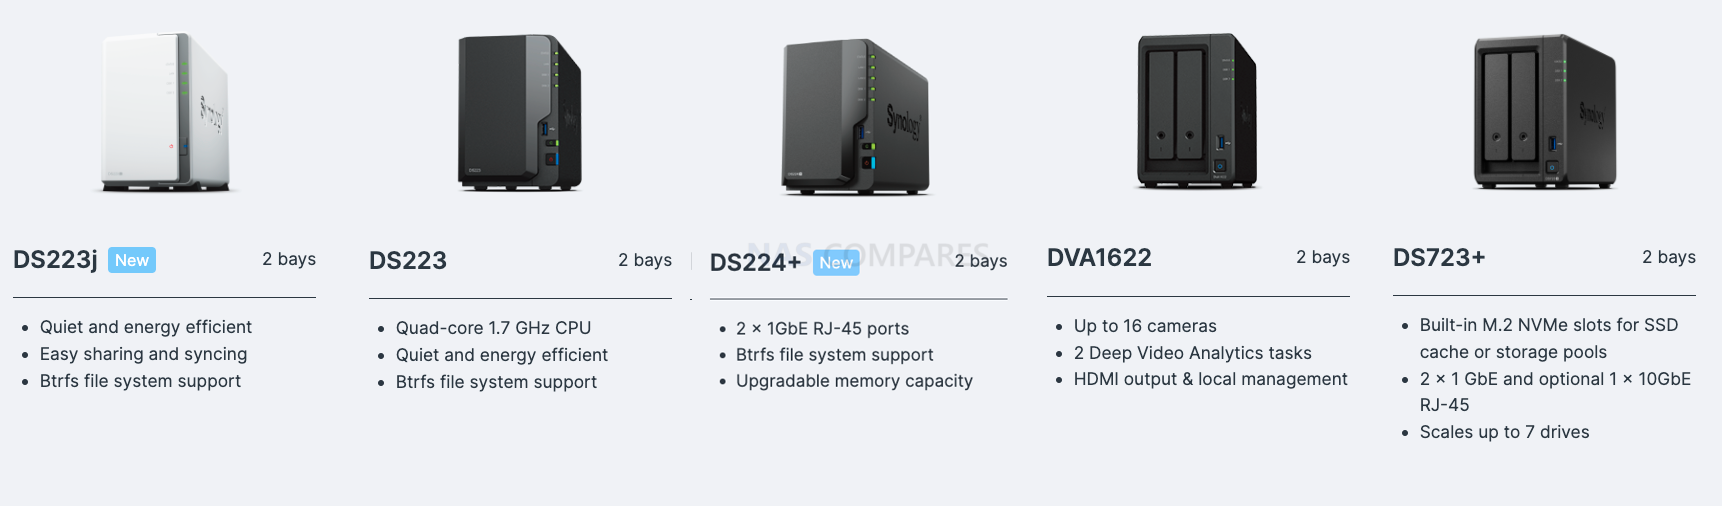 DiskStation DS224+ - 2 Baies - DS224+